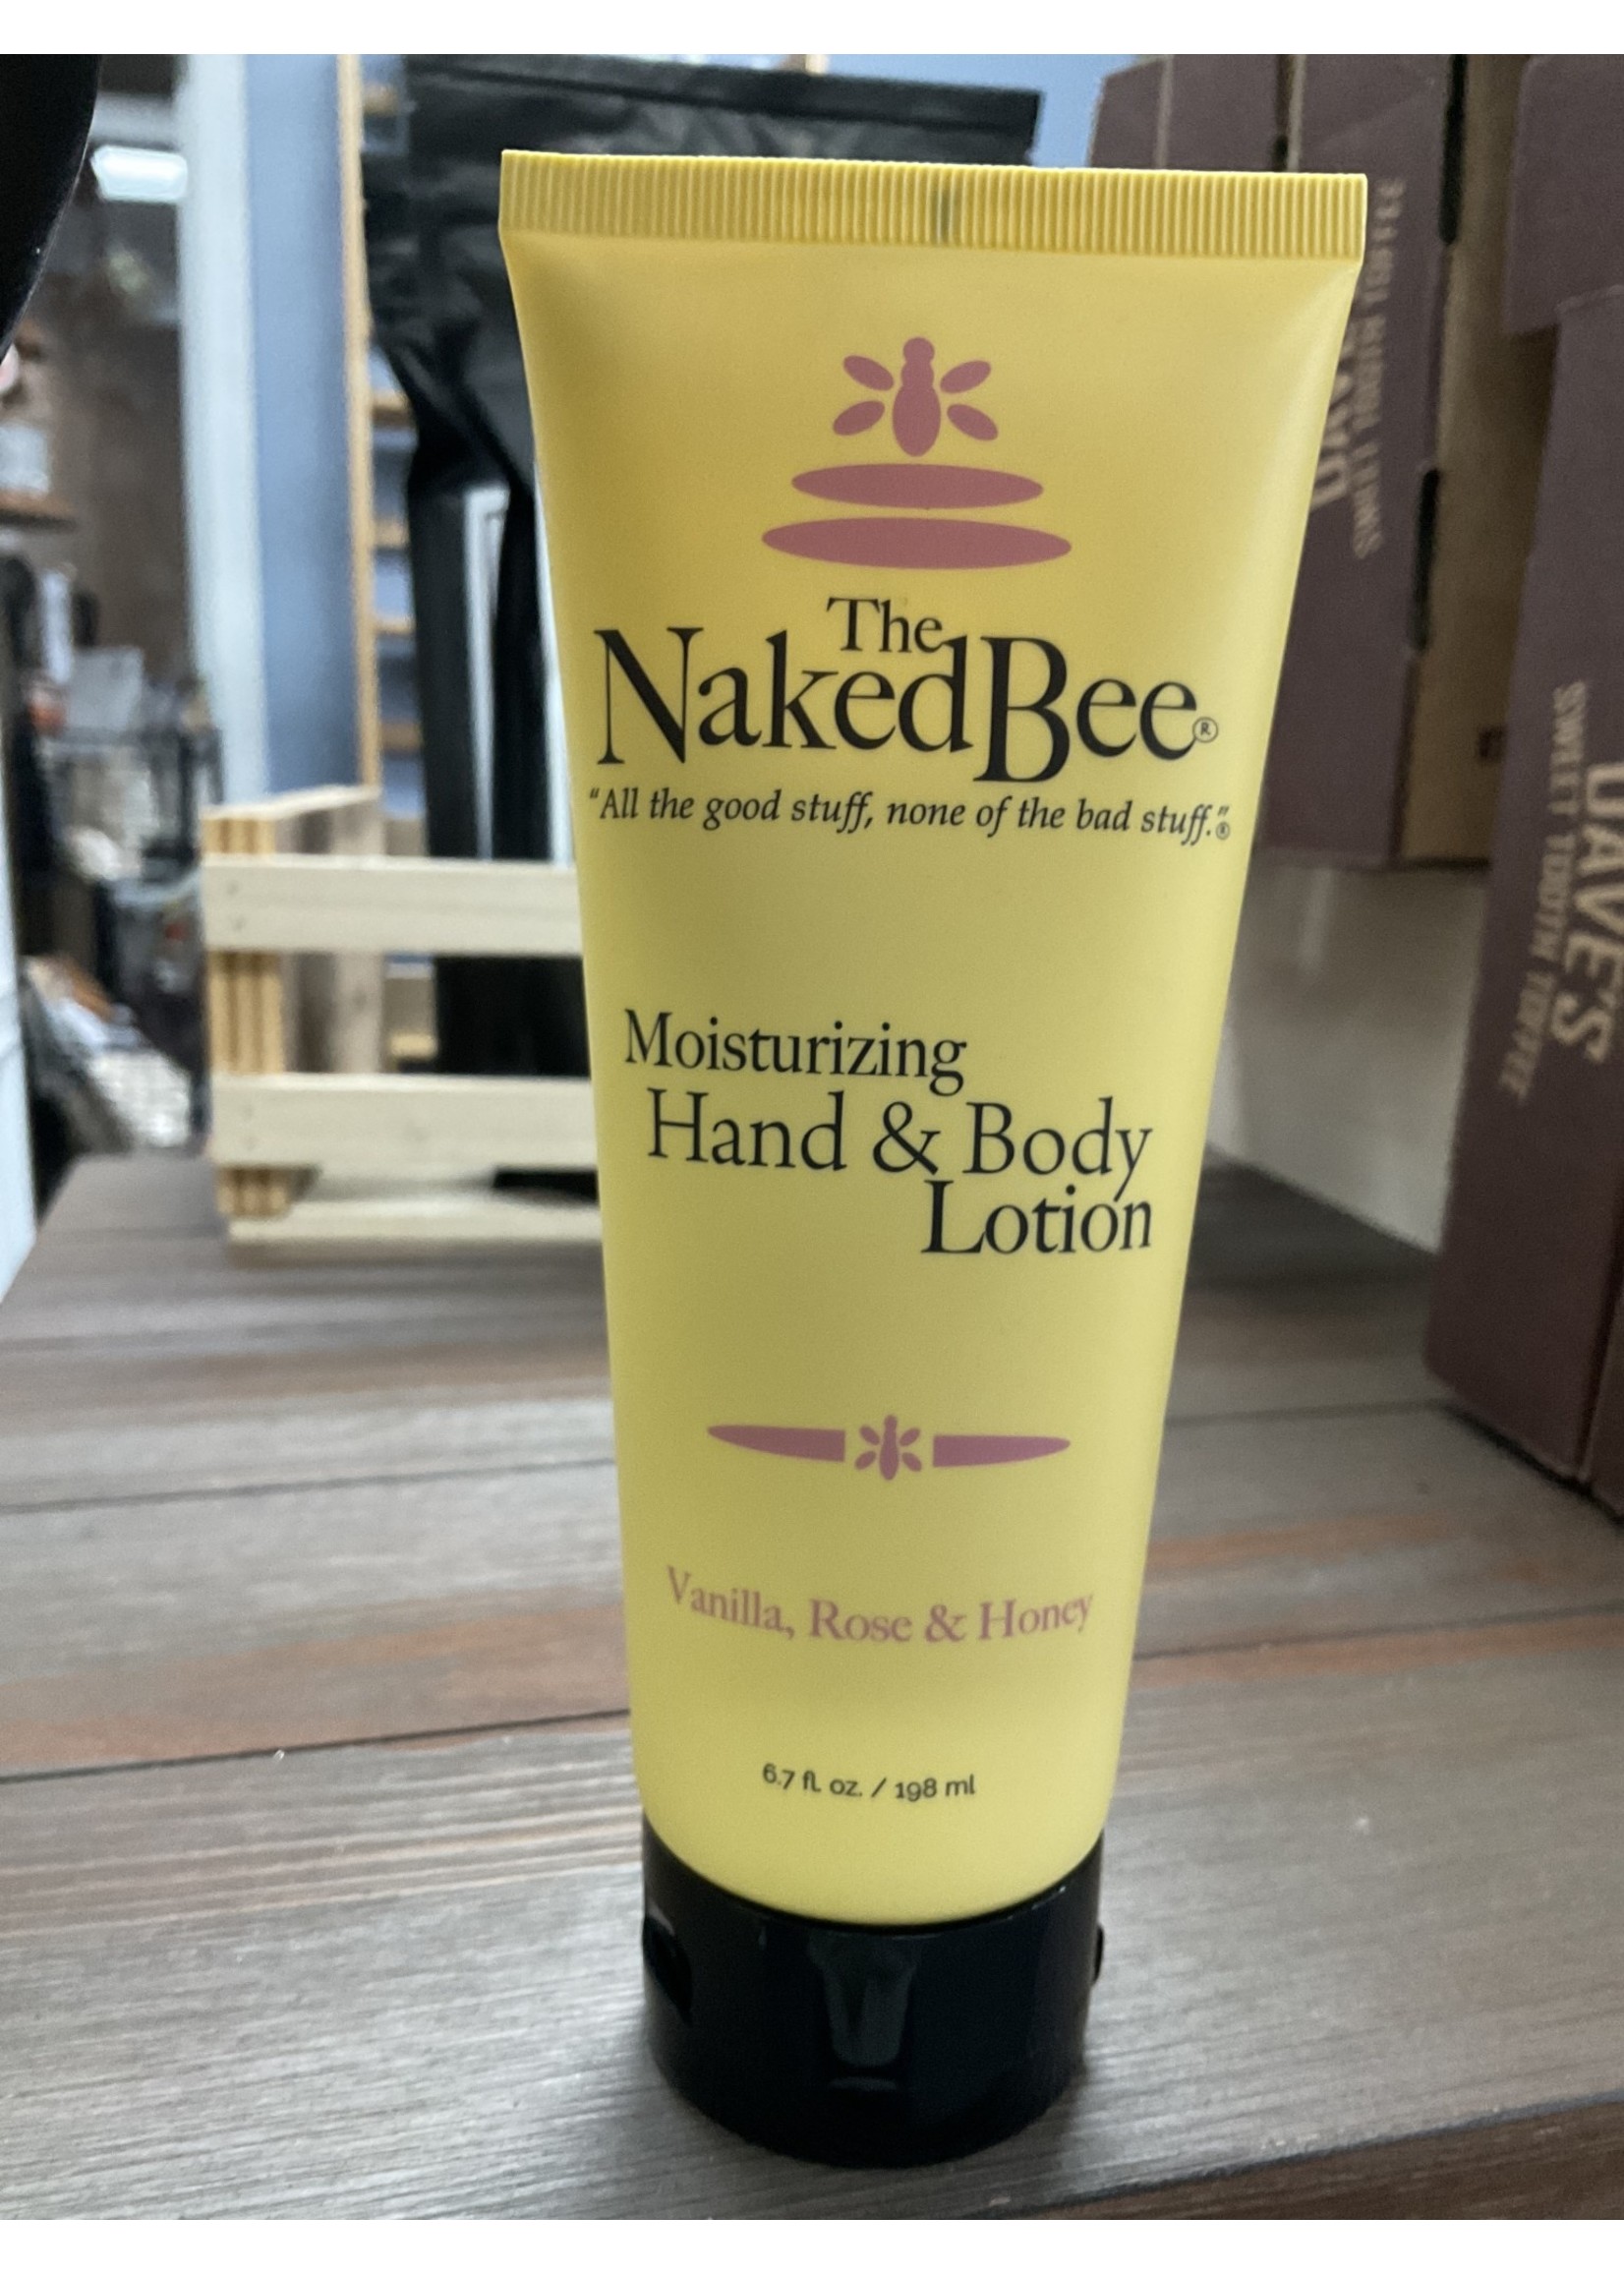 The Naked Bee 6.7 oz Moisturizing Hand & Body Lotion - Vanilla, Rose & Honey